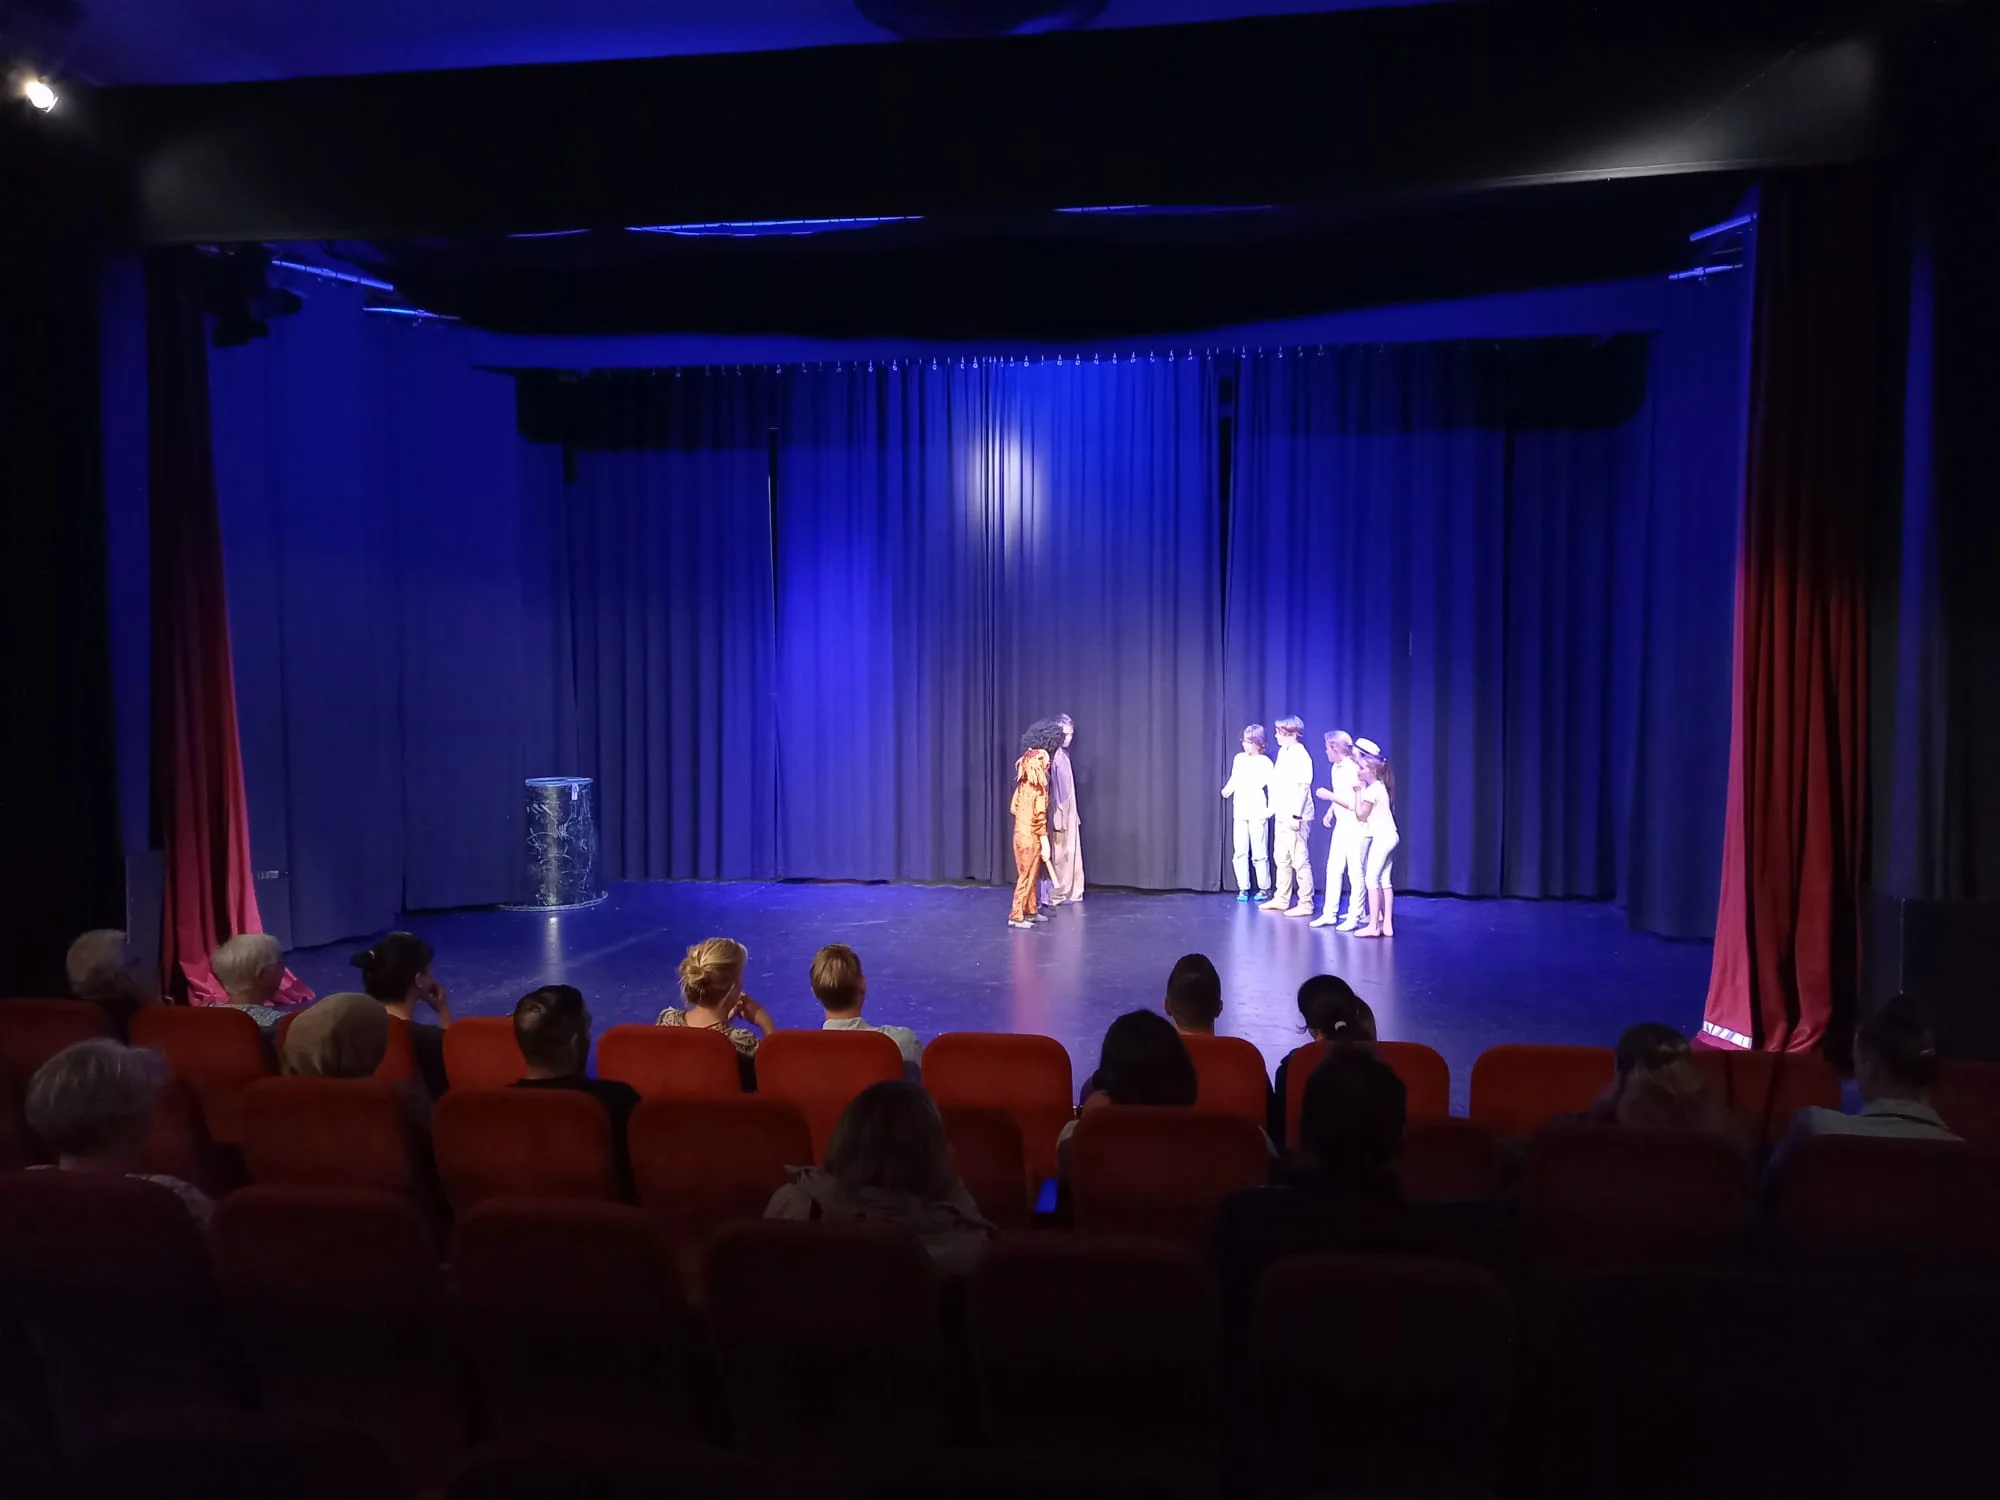 Theaterprojekt in Flensburg